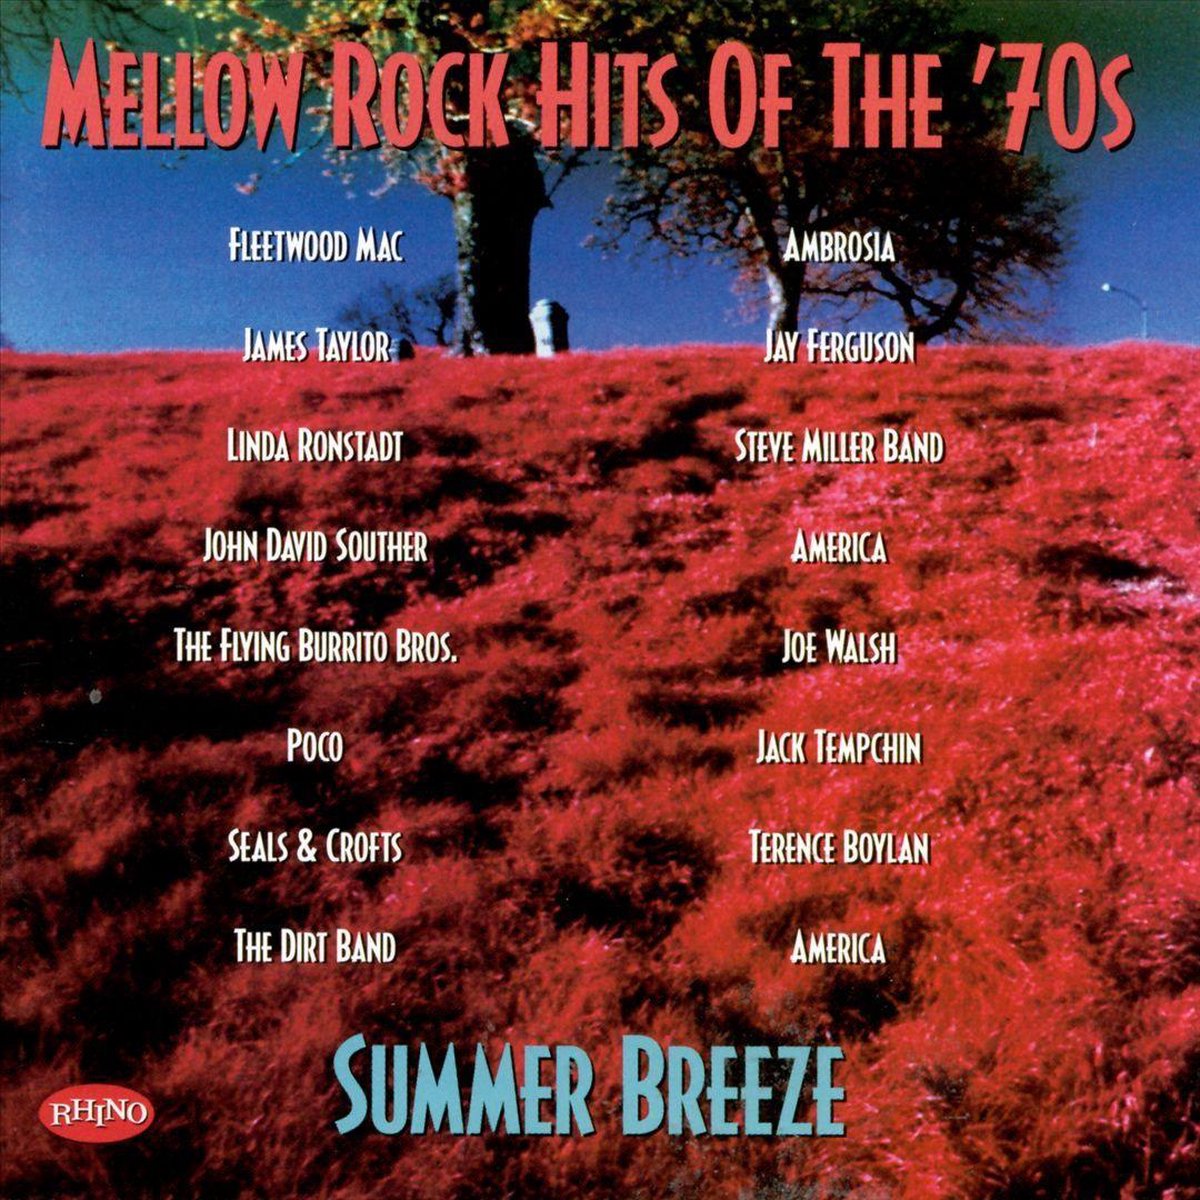 Mellow Rock Hits of the '70s: Summer Breeze - various artists